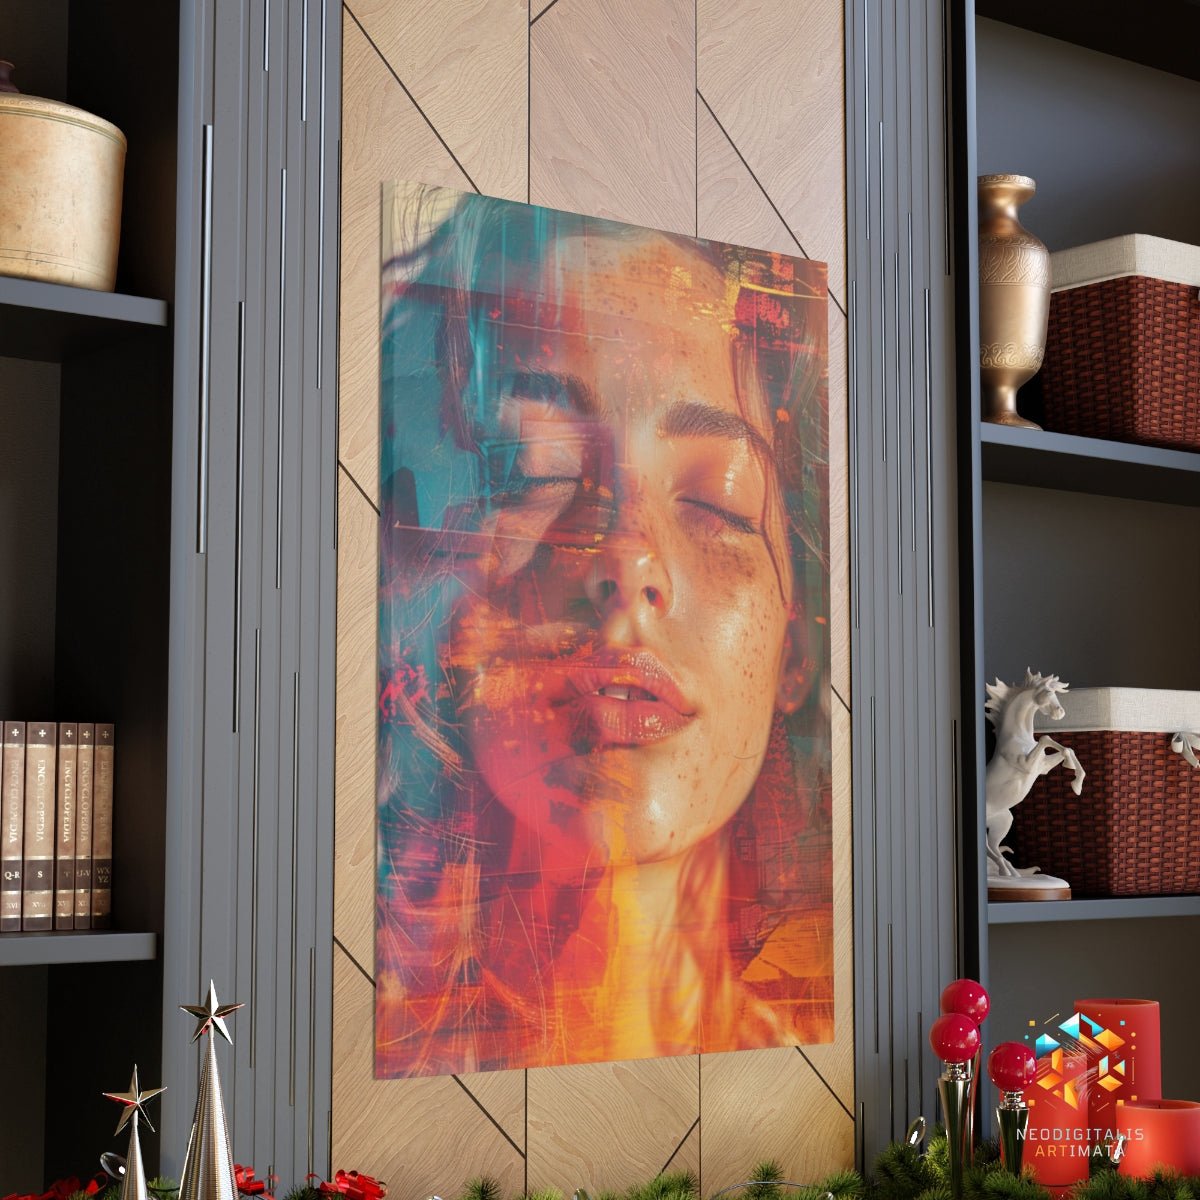 Vivid Embrace Artwork - Original Tie-dye Style Portrait Wall Art - NeoDIGITALis ARTimata